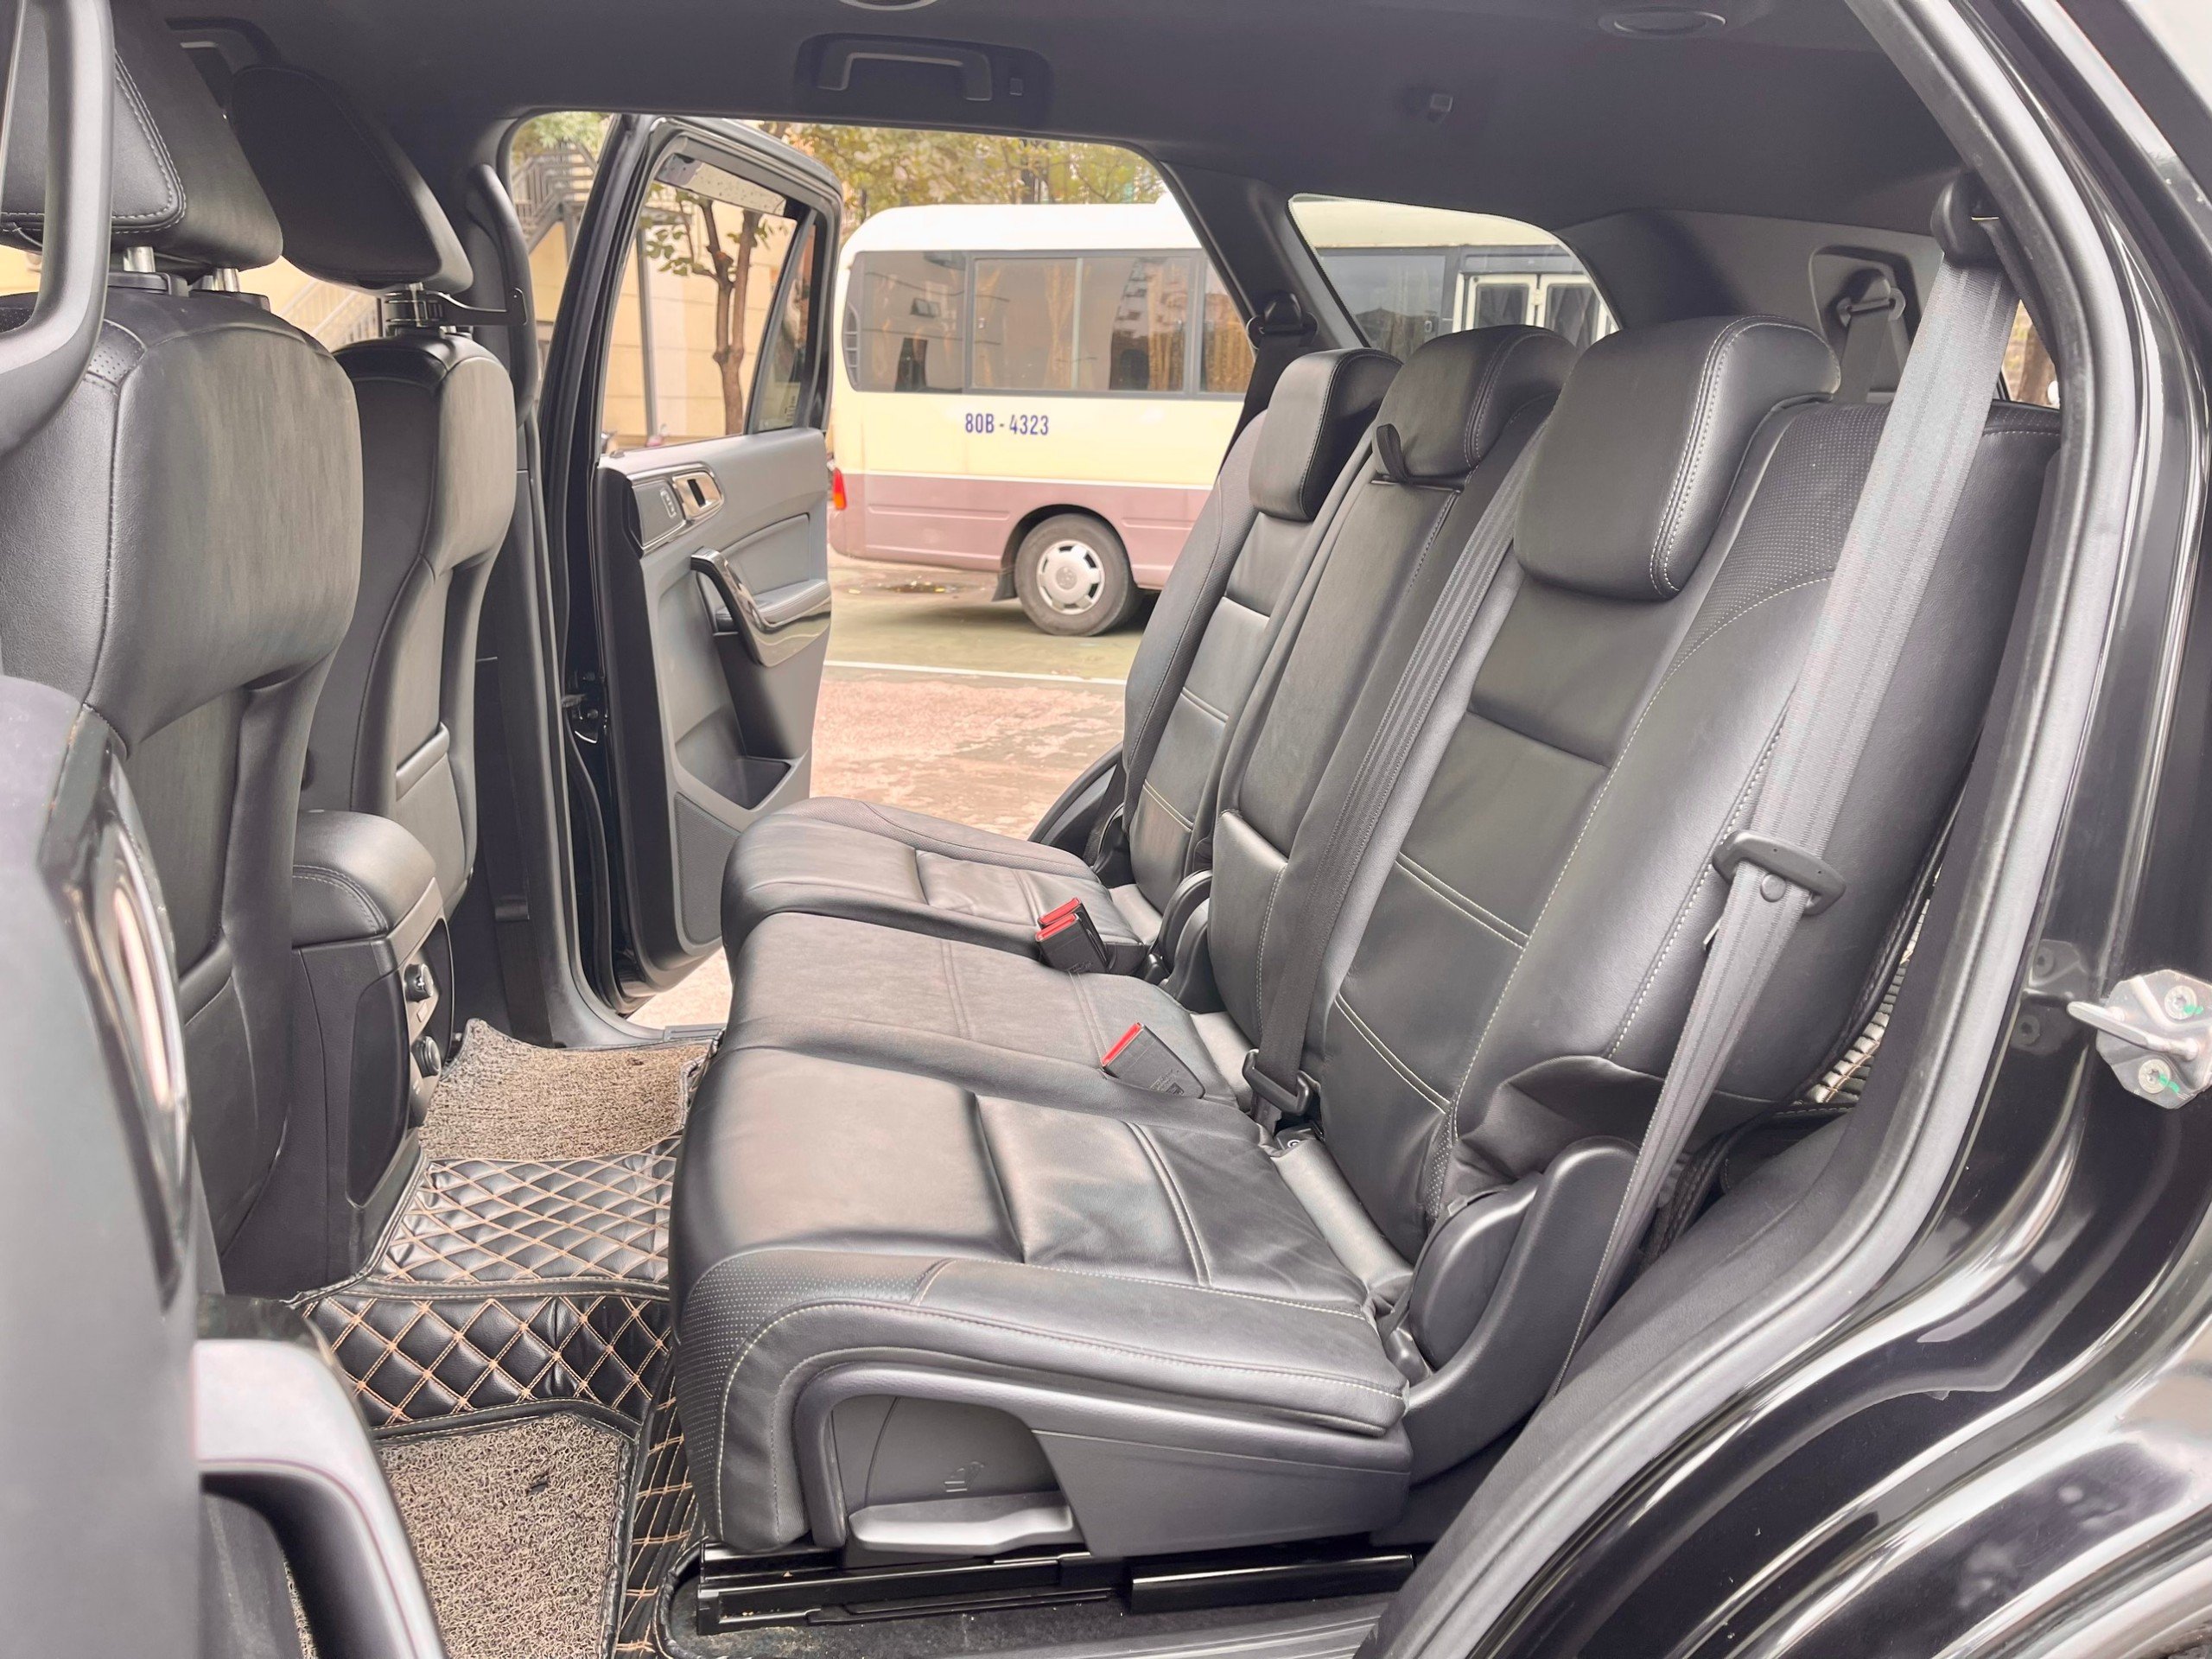 Cần bán xe Ford Everest Titanium 2WD 2.0 sản xuất 2019 